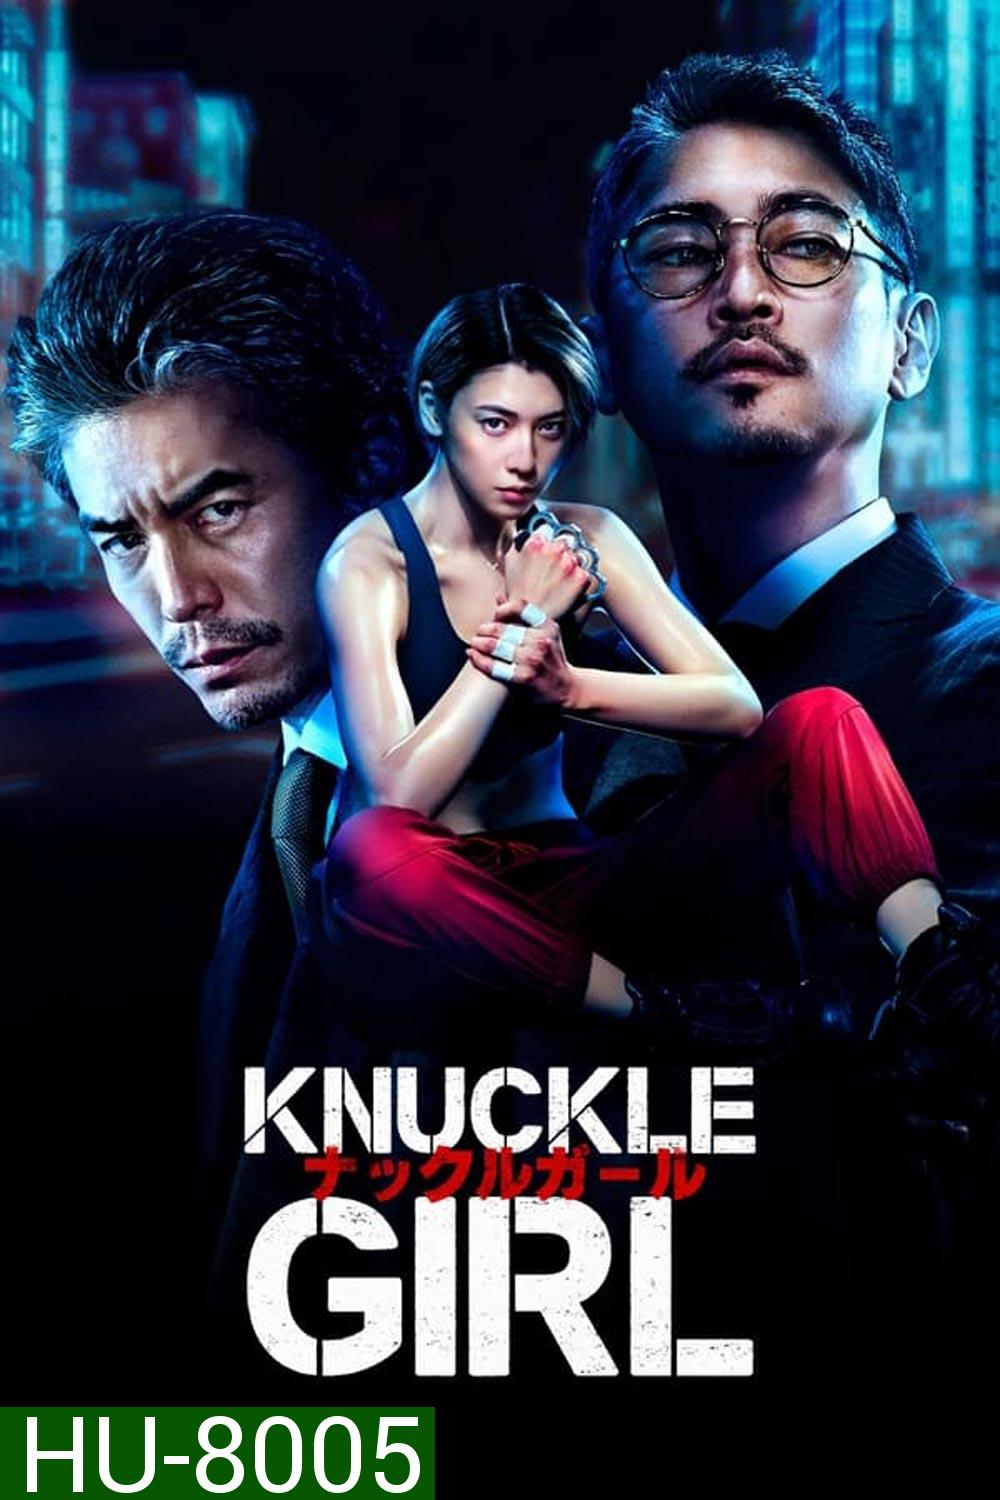 Knuckle Girl เจ๊ทวงแค้น (2023)